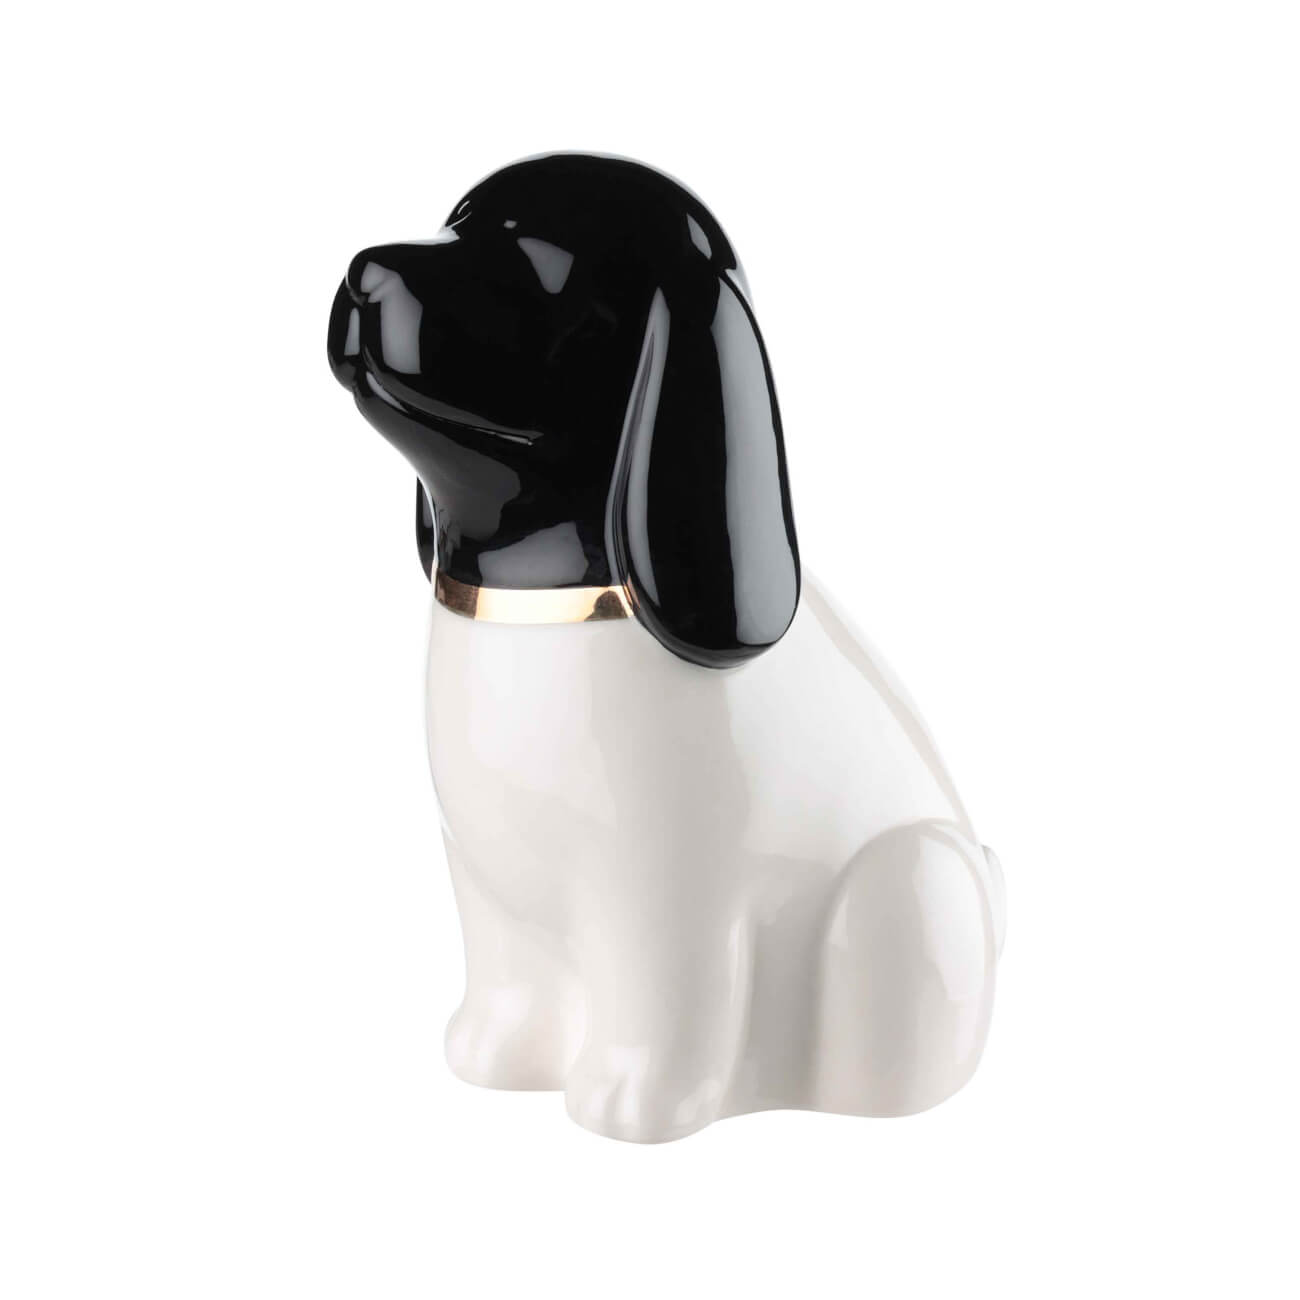 Статуэтка, 12 см, керамика, черно-белая, Собака, B&W статуэтка ананас черно золотая керамика 24 см